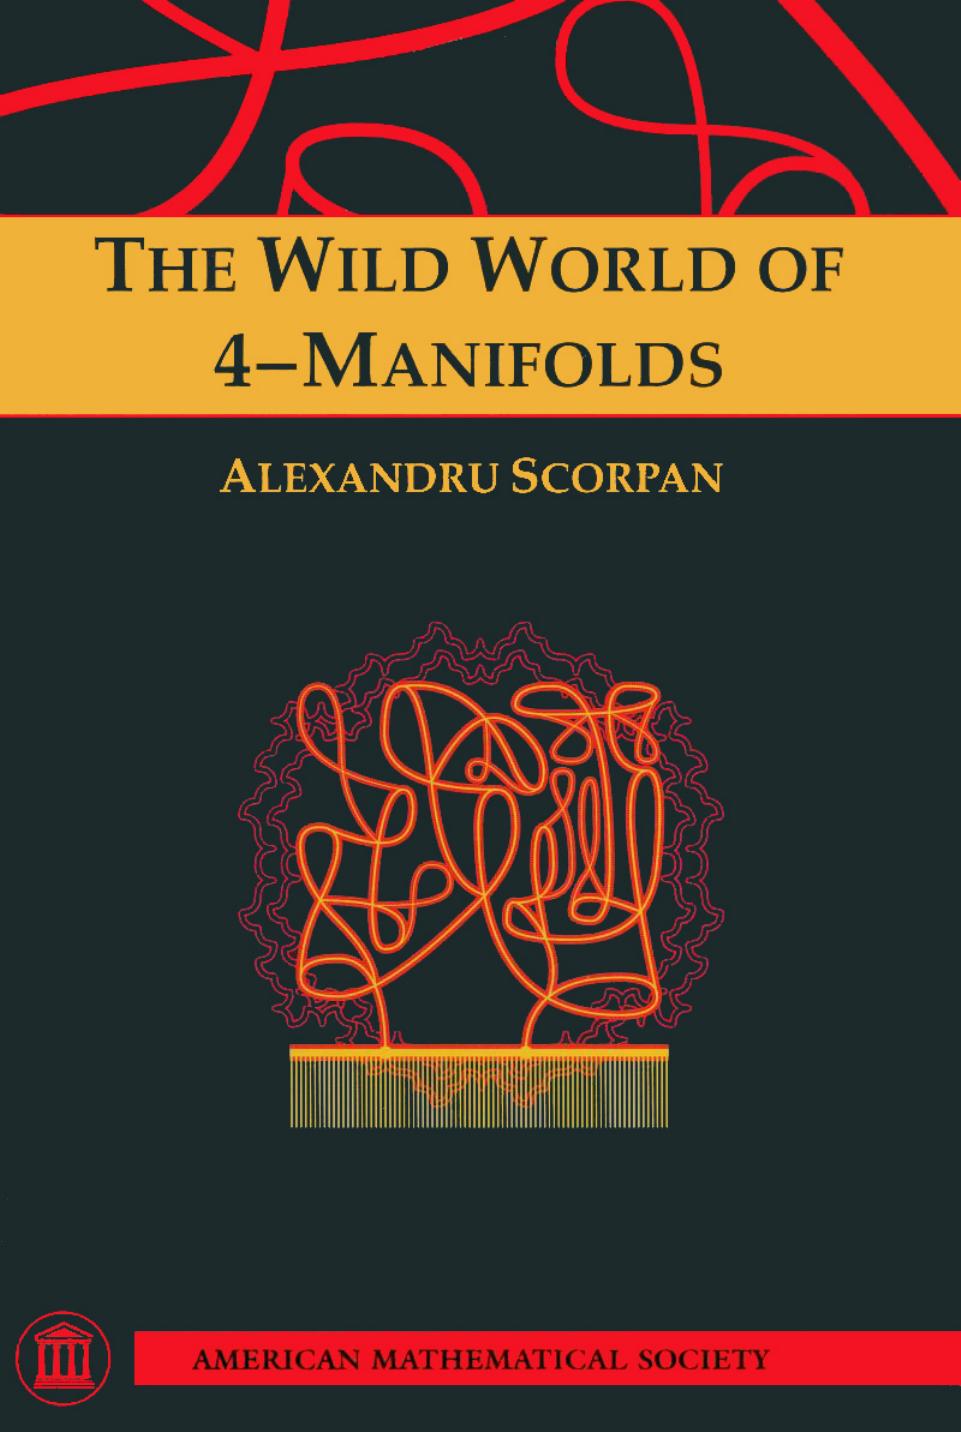 The Wild World of 4-Manifolds by Alexandru Scorpan